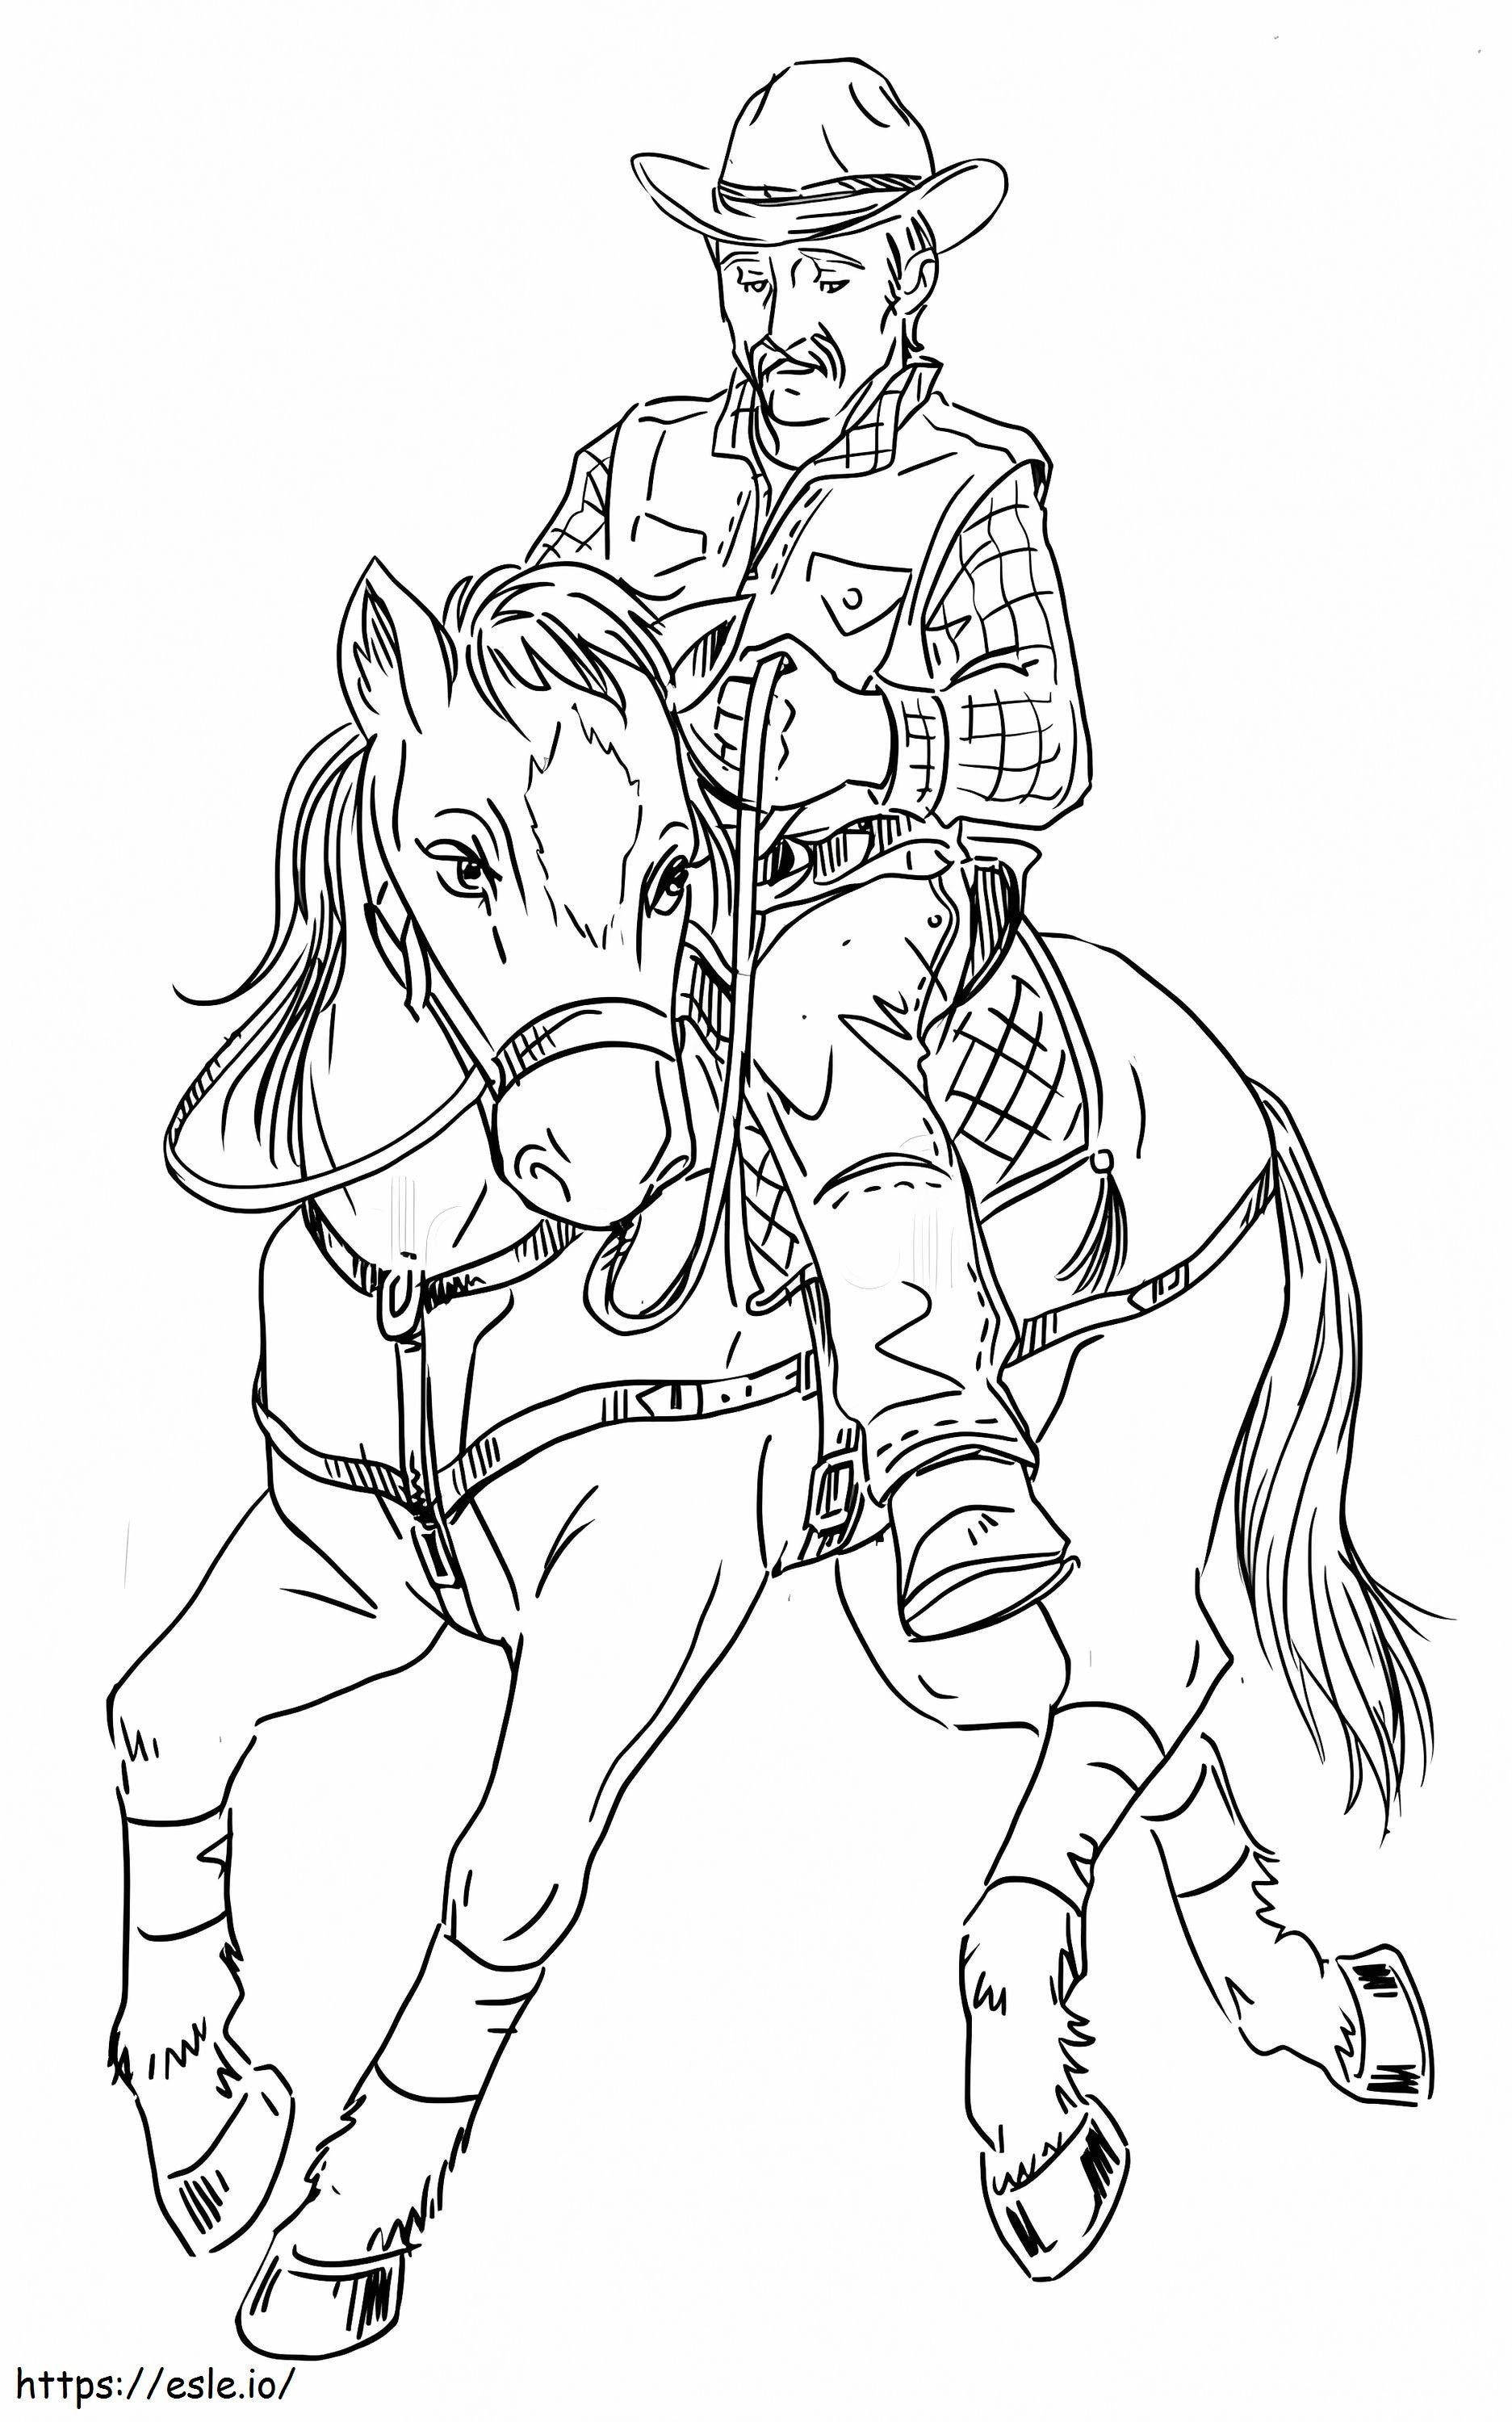 Basic Cowboy Riding Horse coloring page